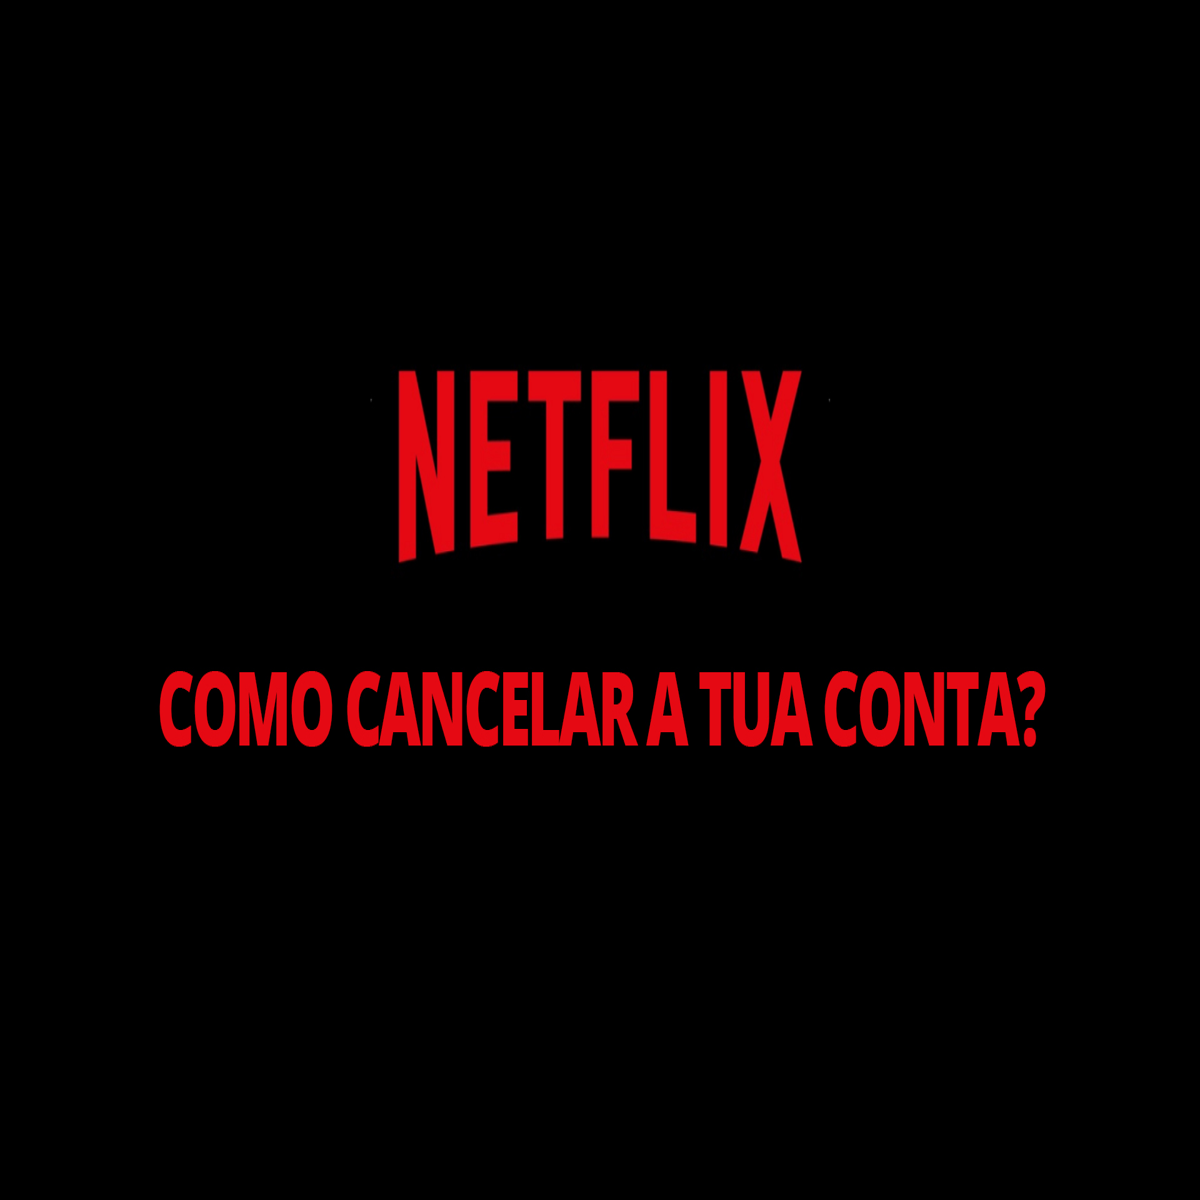 Politicamente Incorreto - Bora cancelar Netflix: 0800-887-0201